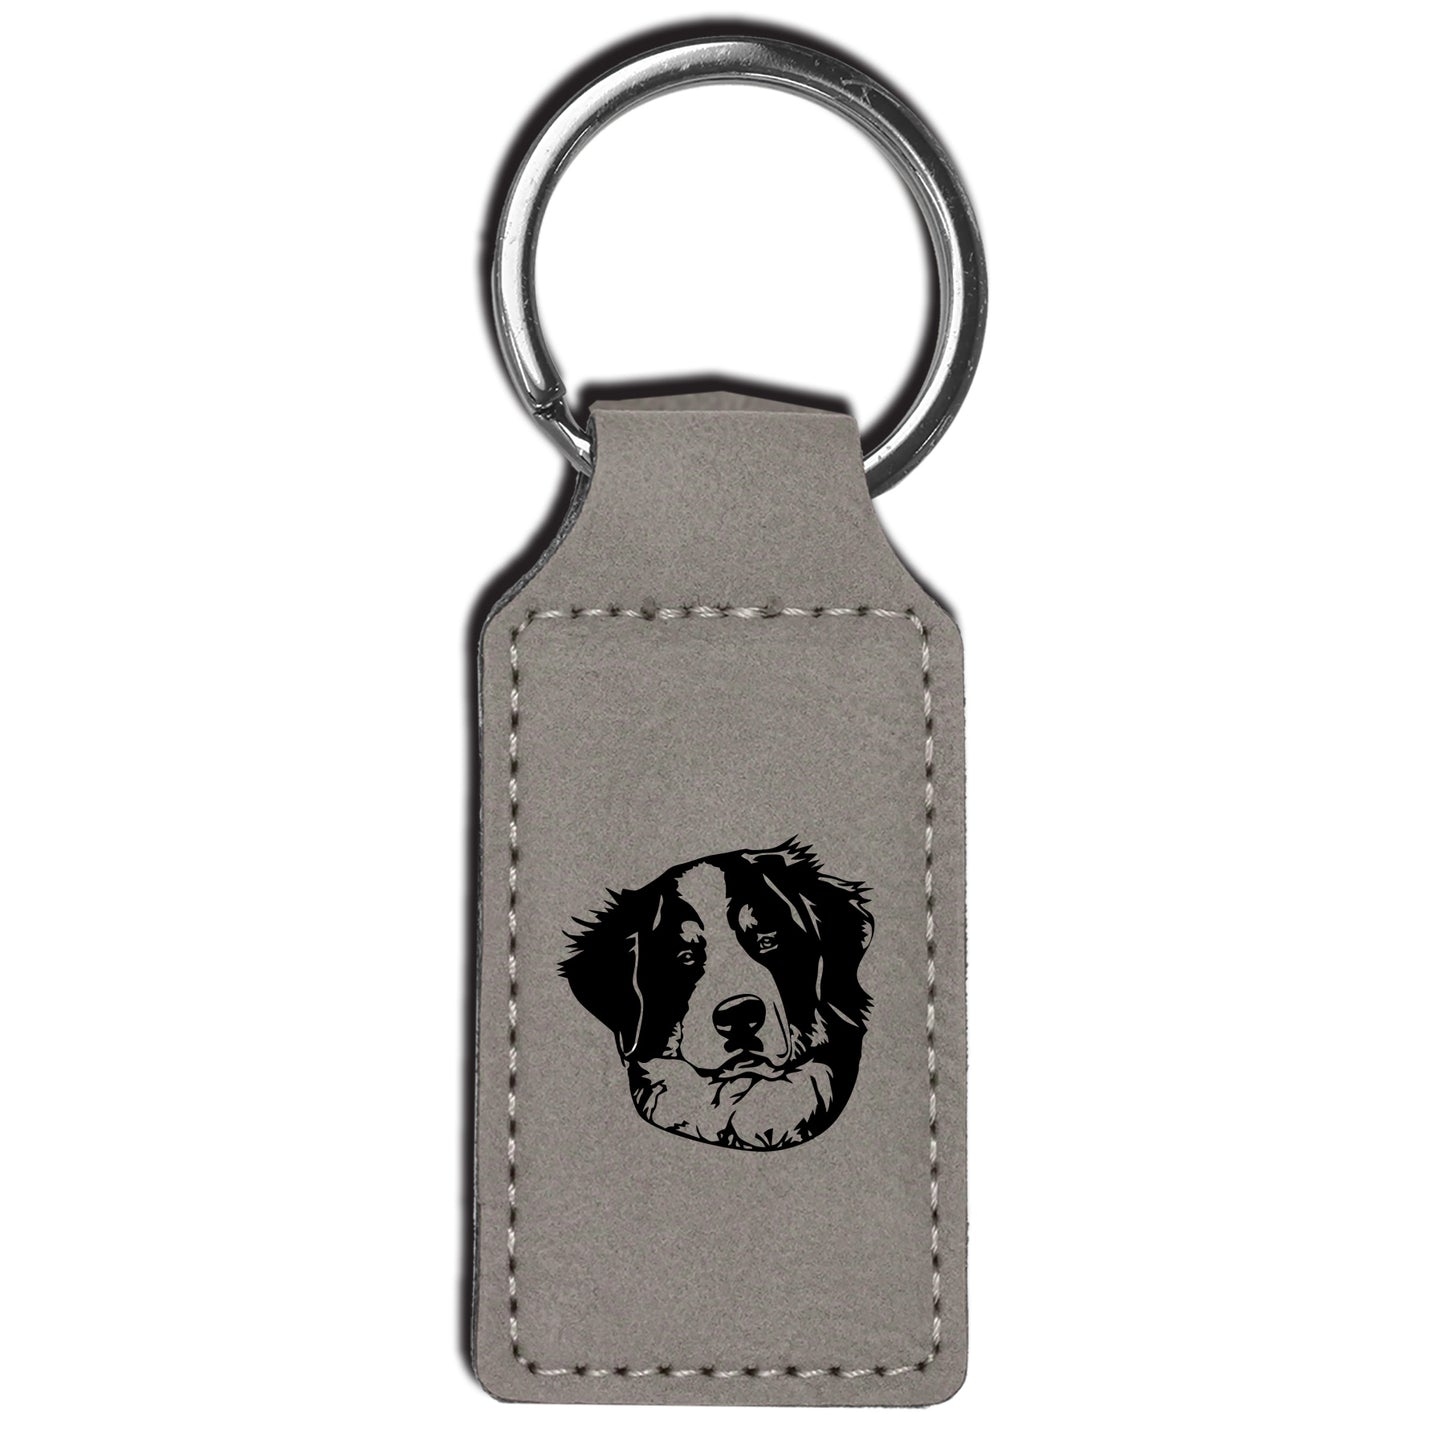 Bernese Mountain Dog Leatherette Key Chain